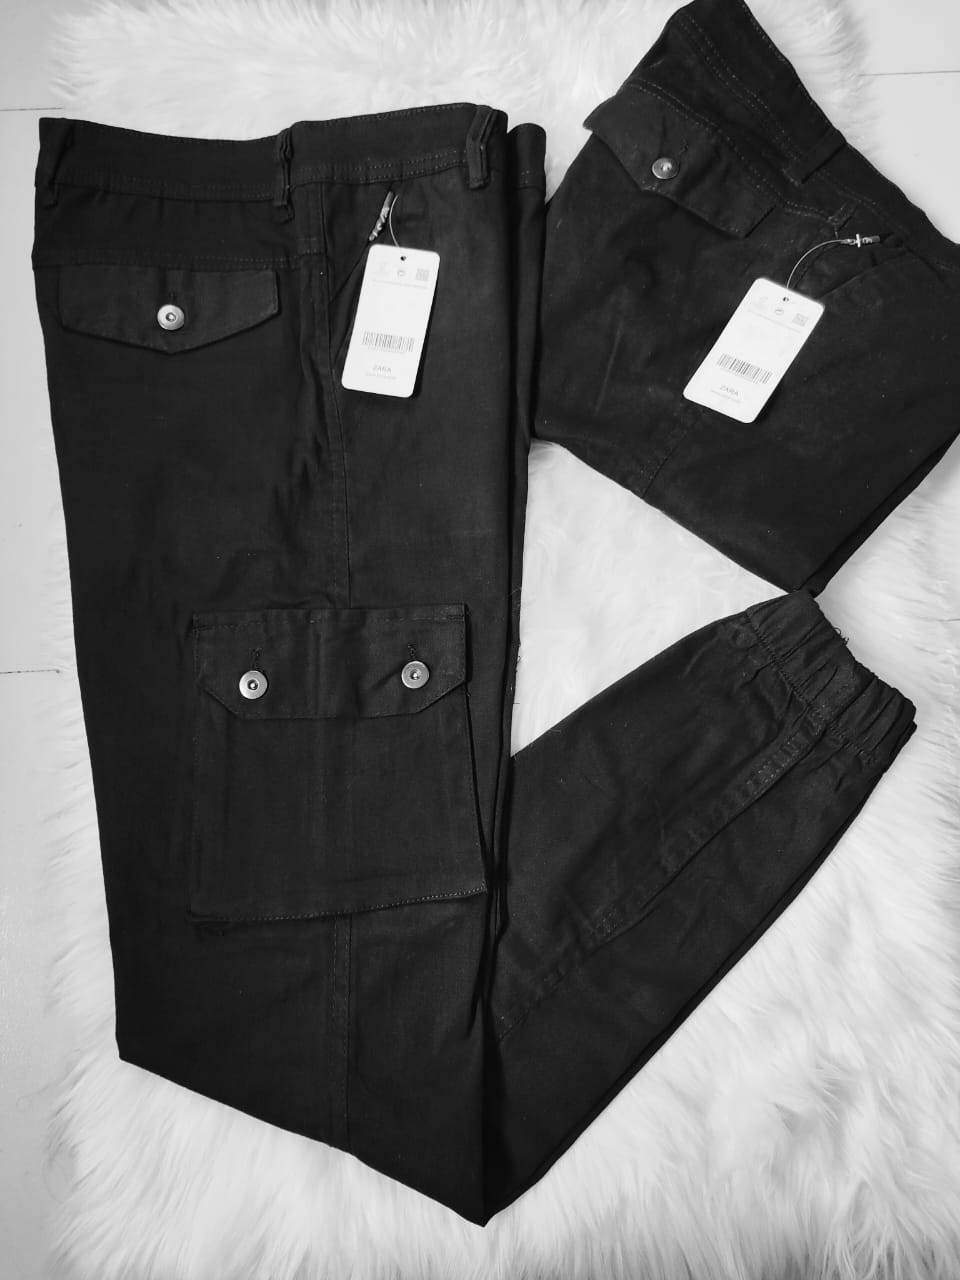 Plain Black Men 6 Pocket Cotton Jogger Pant, Casual Wear at Rs 650/piece in  Jaipur